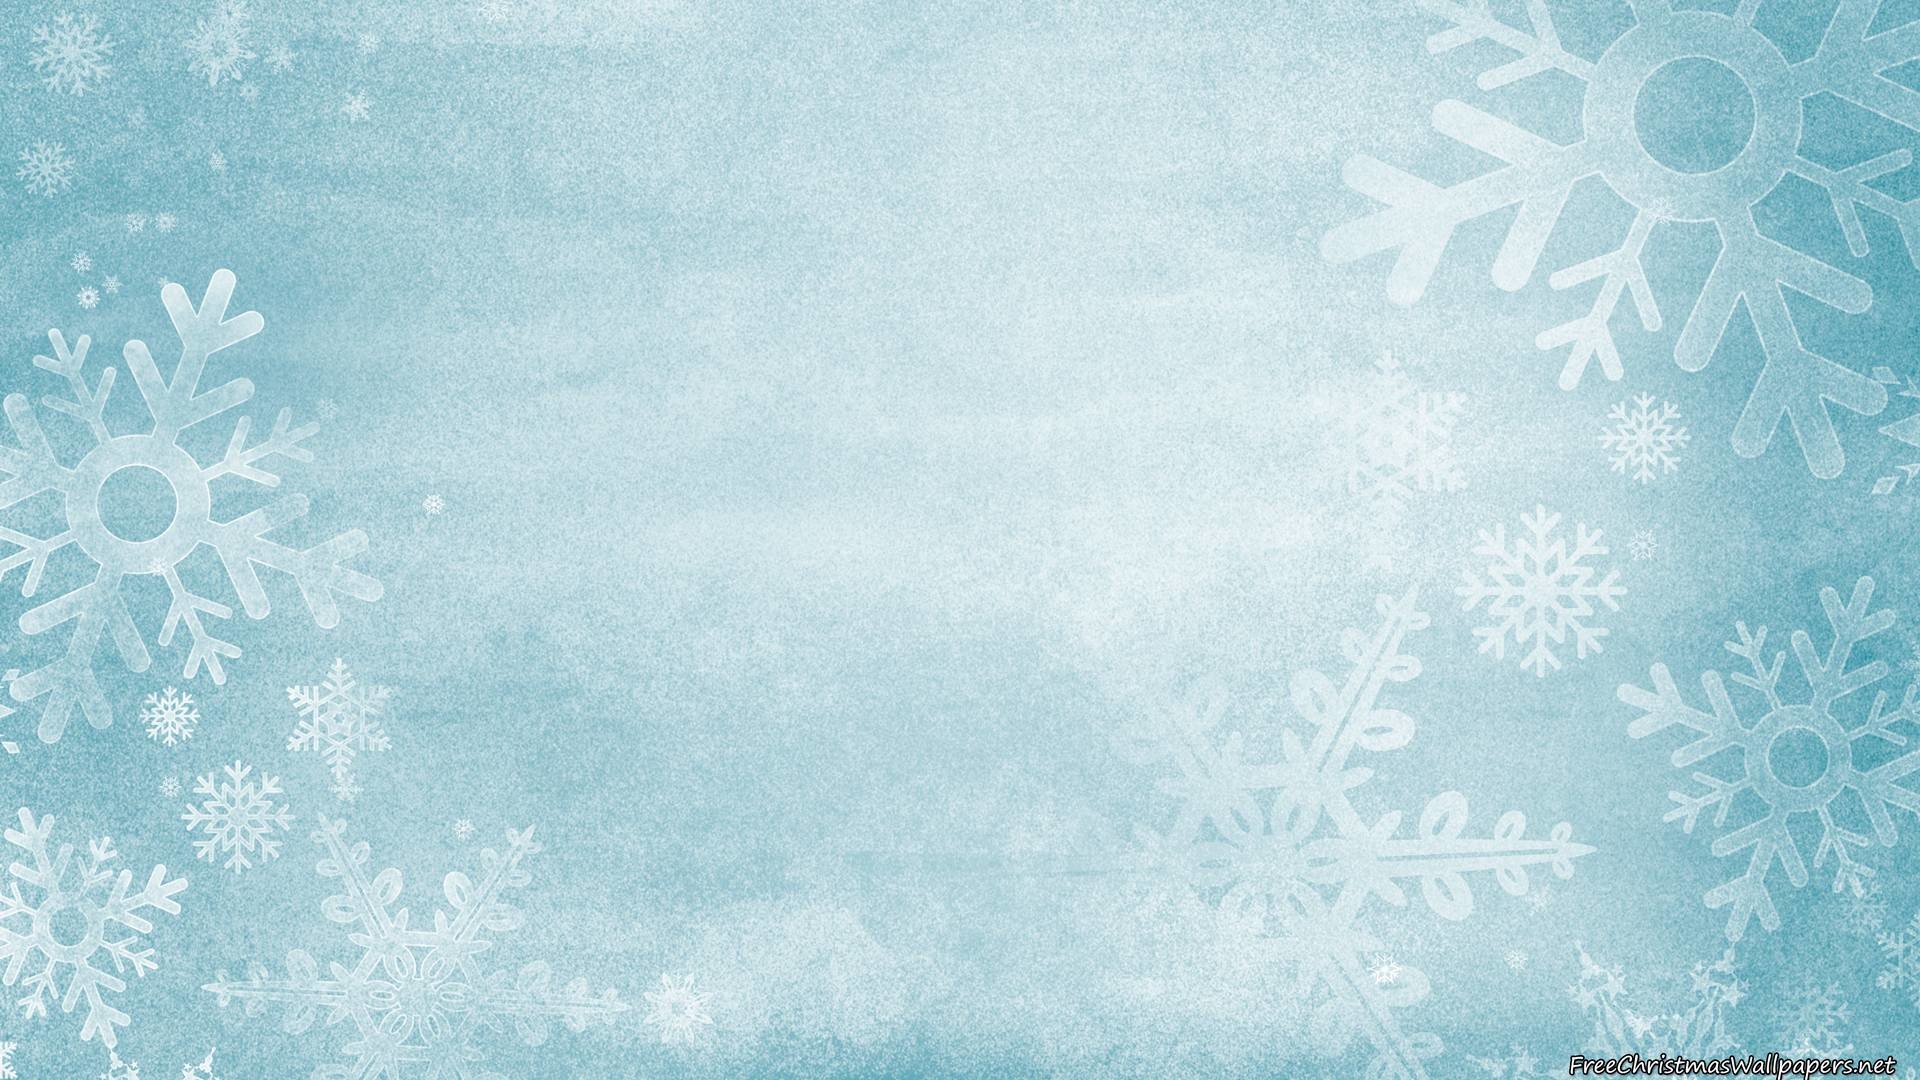 1920x1080 Frozen Christmas Background Wallpaper